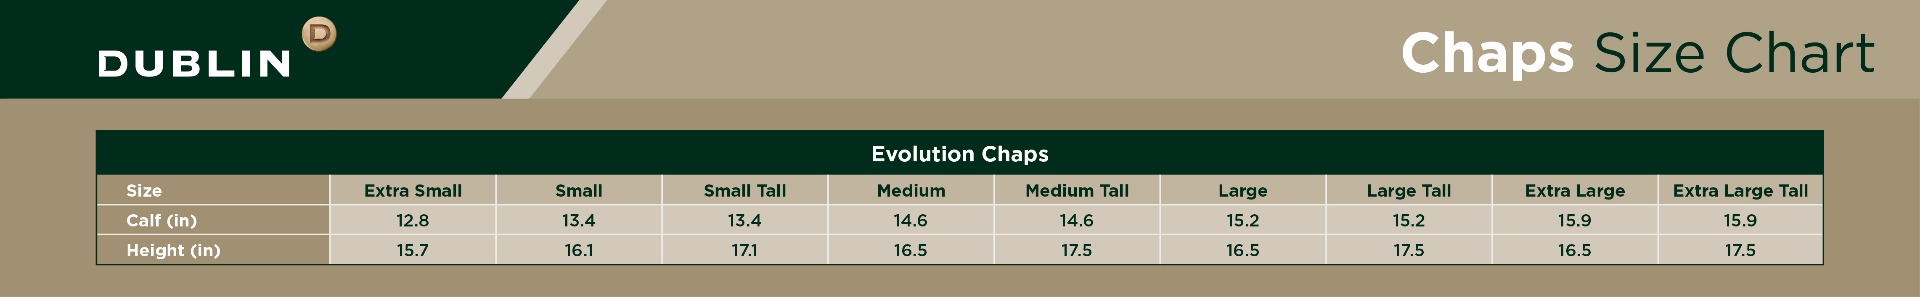 Dublin Evolution Half Chap Size Chart